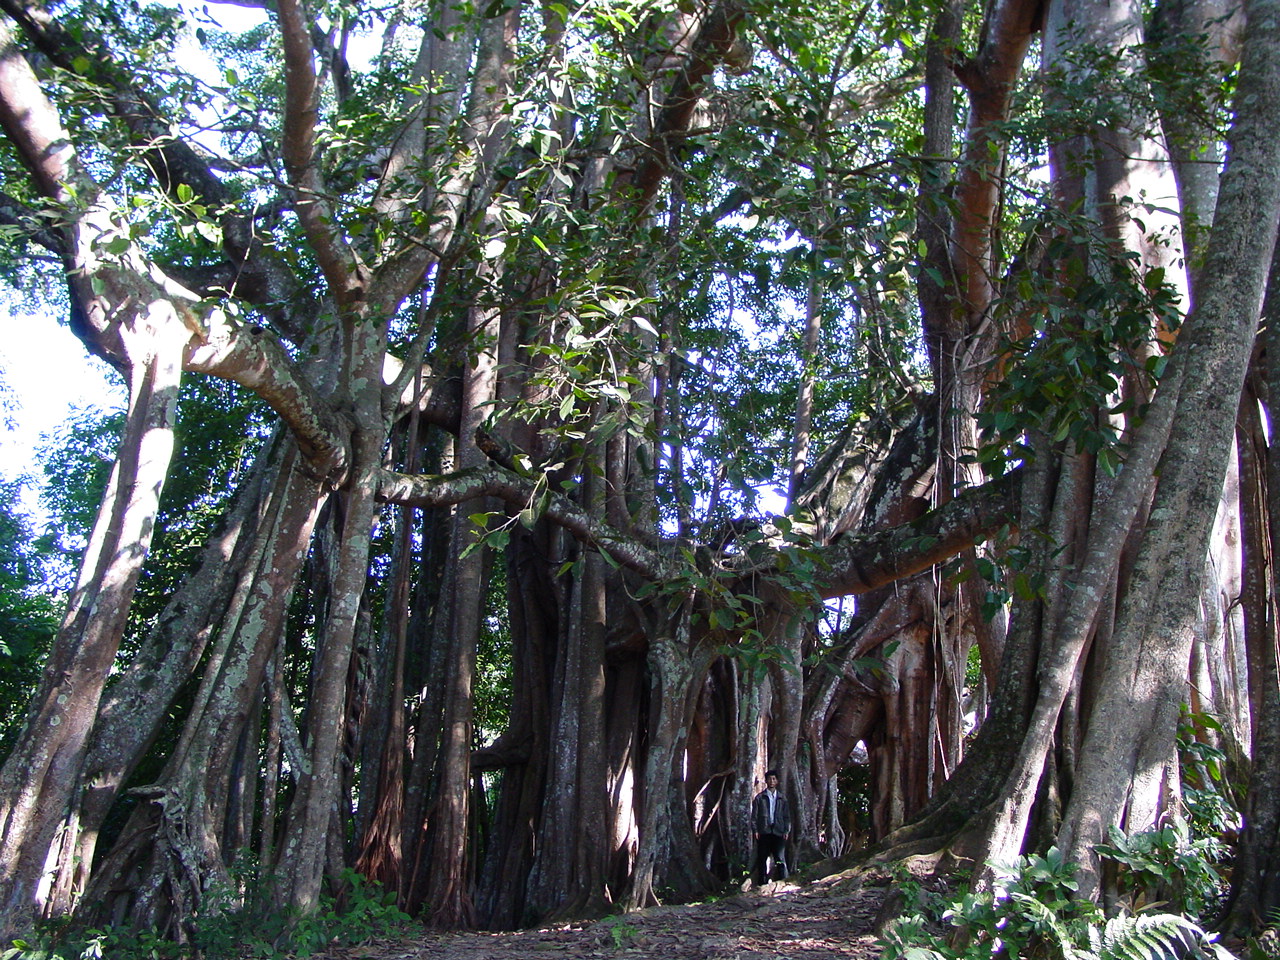 The King Banyan Trees in Dehong